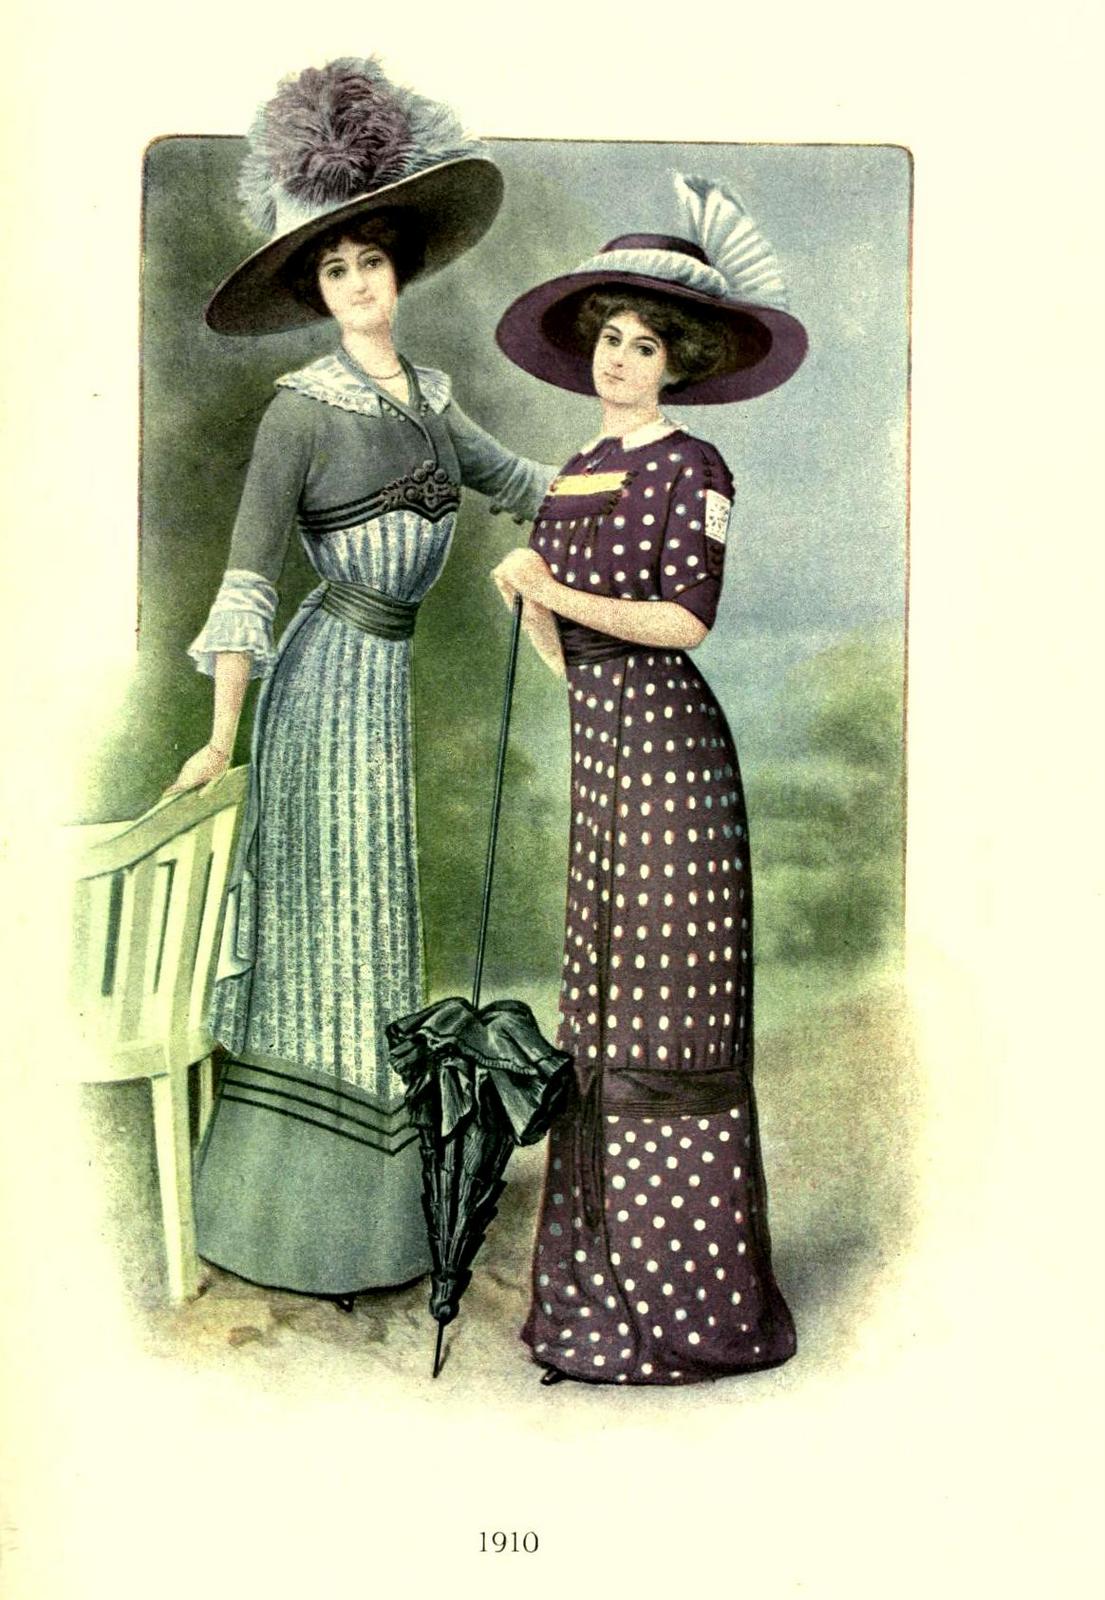 bumble button Buying Hats in Paris Salon in 1910. Free Edwardian